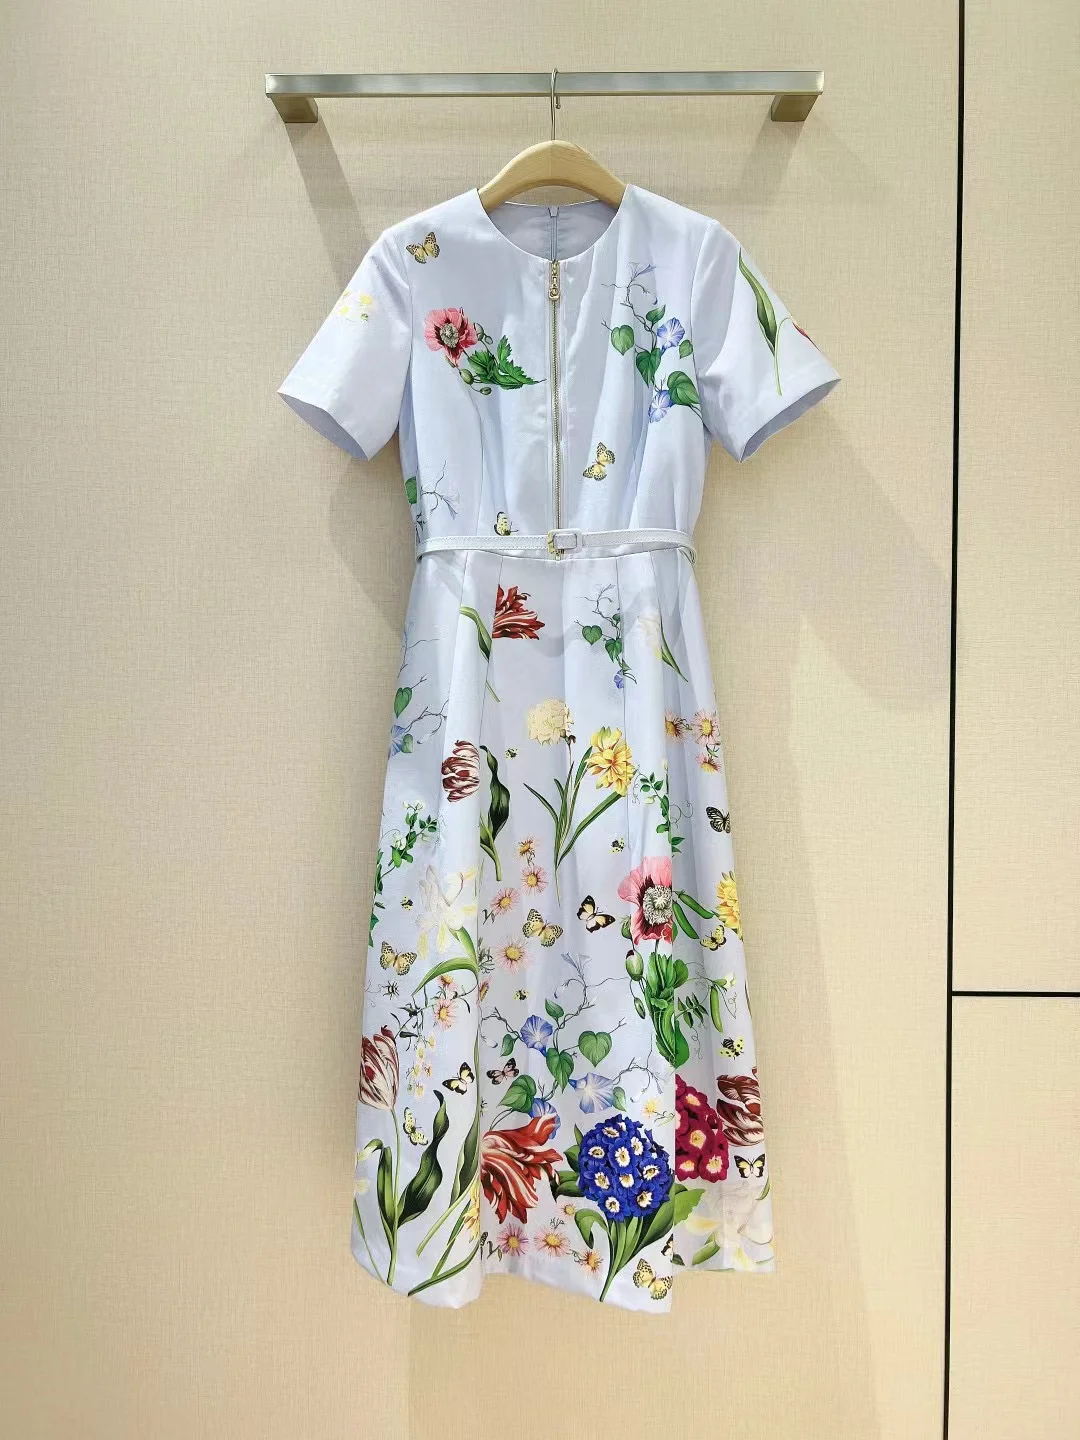 Fyion Fashion Runway 2022 Summer Midi Dress Women Flower Printed Short Sleeves Holiday Party Top Belt Light Blue Dress